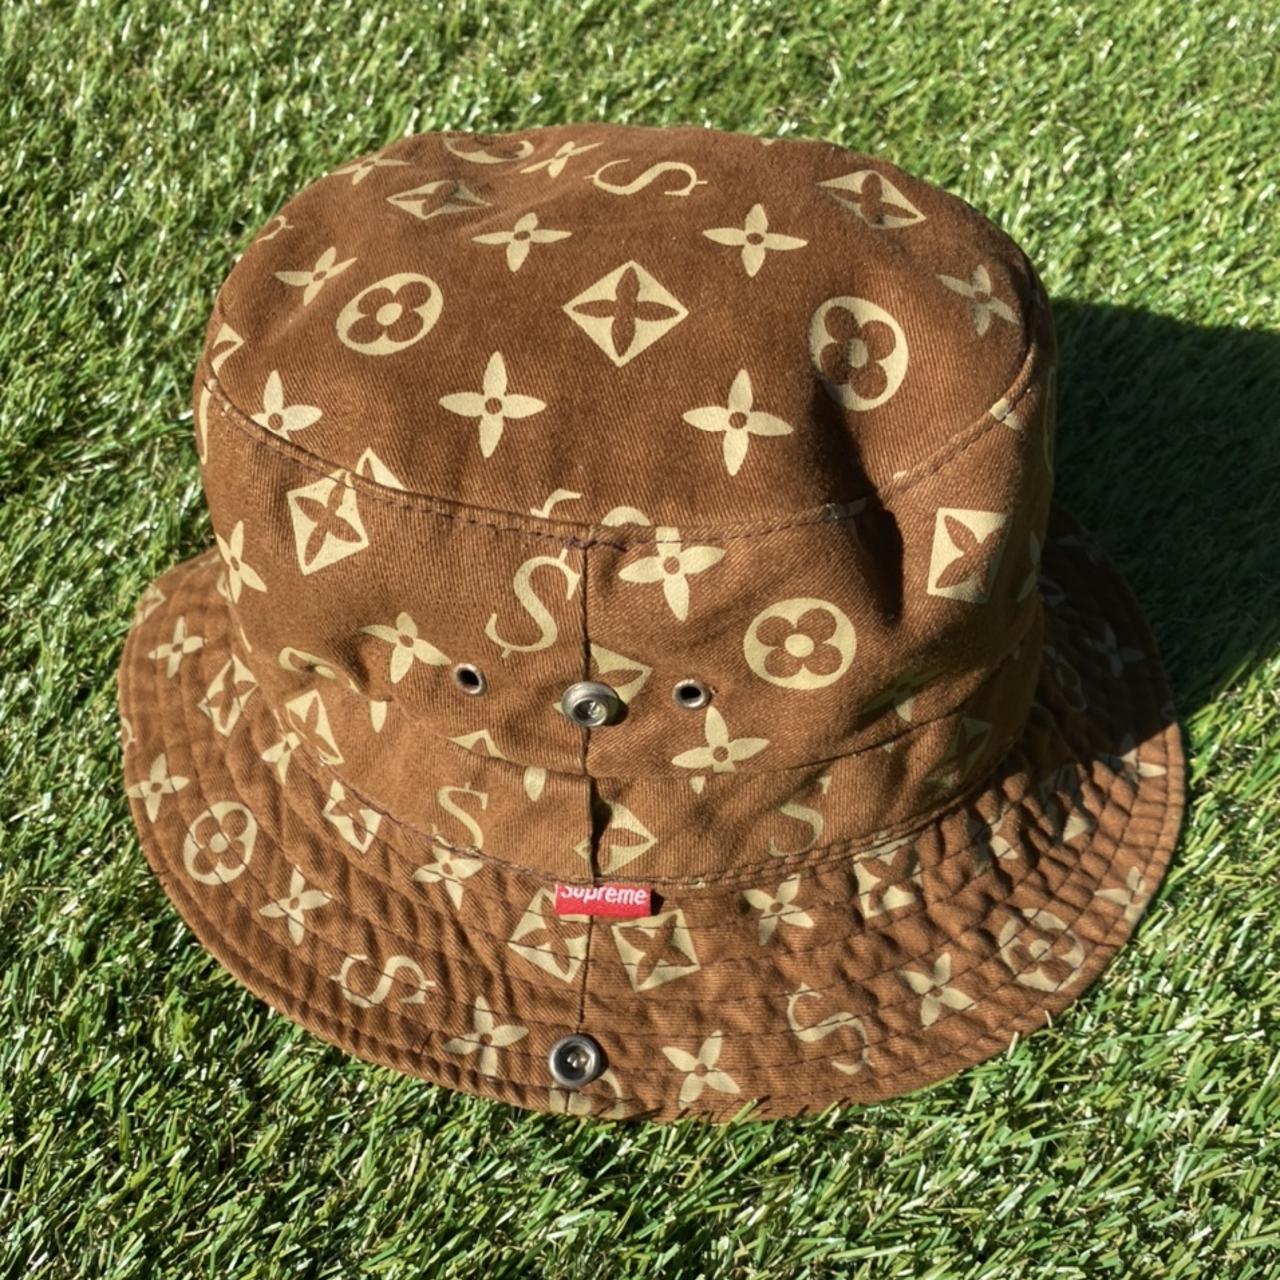 Cap Louis Vuitton Supreme Hoodie Hat, Supreme hat, logo, monogram